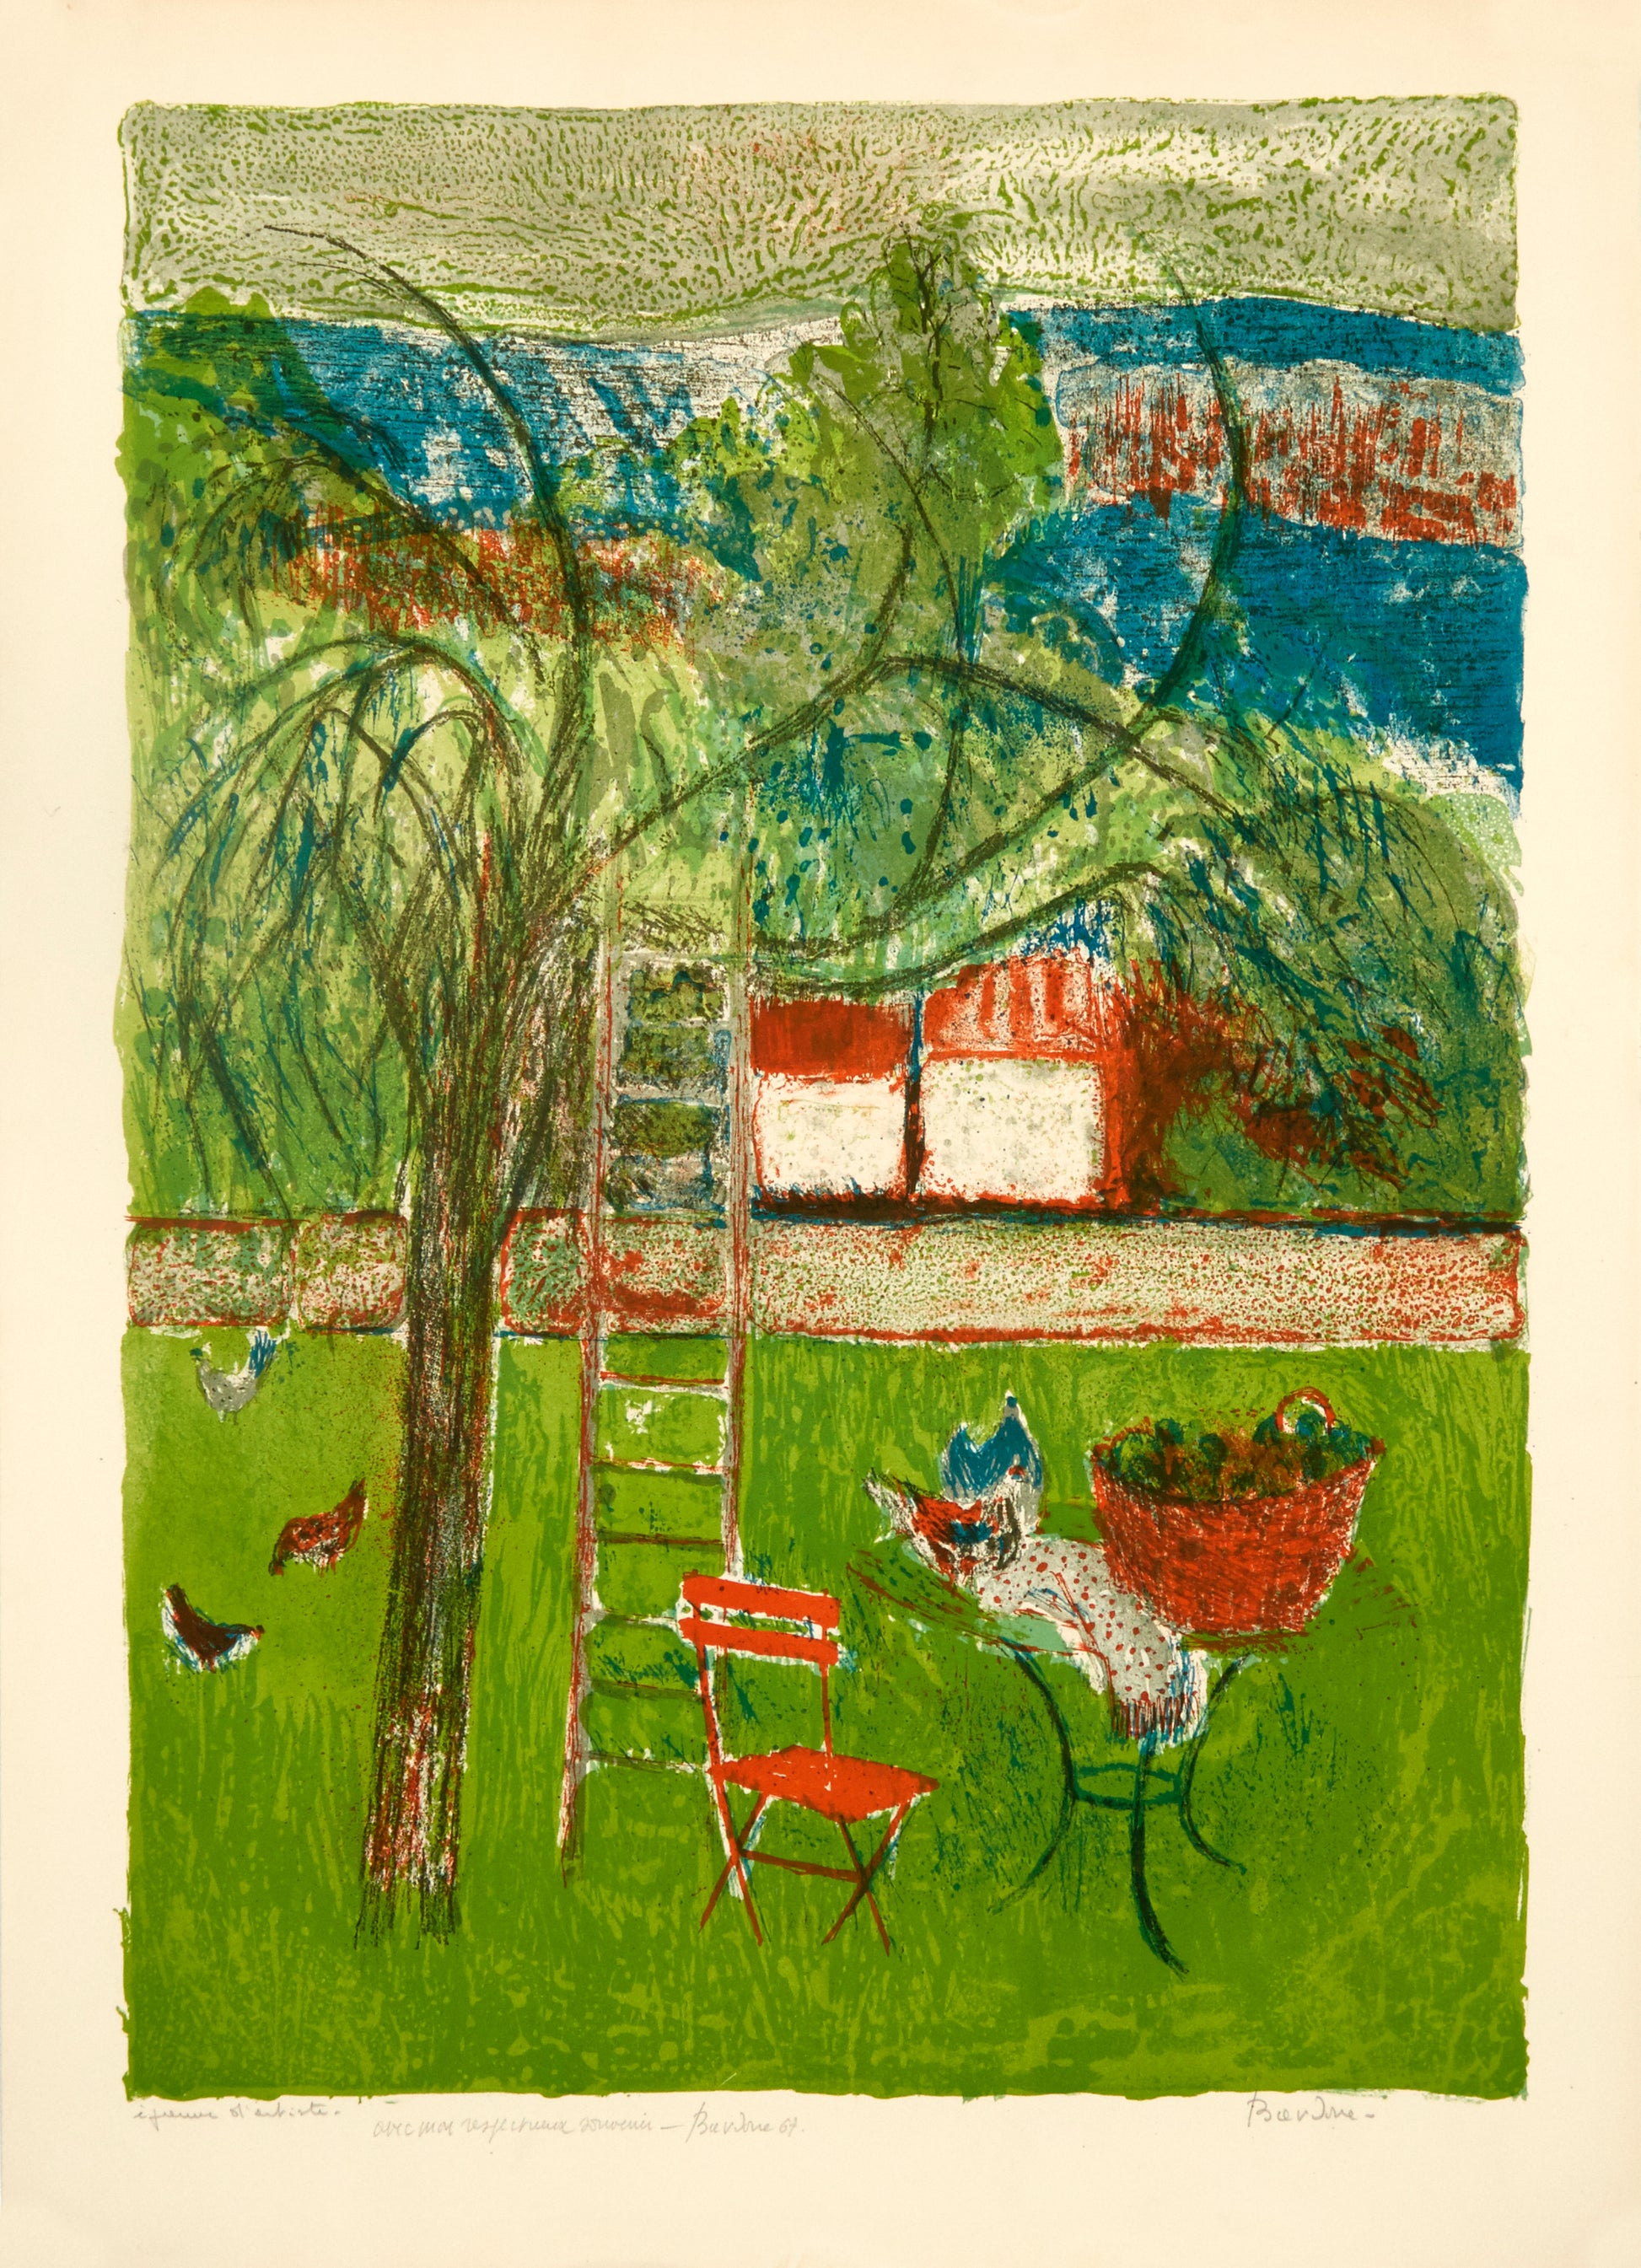 Backyard, Ladder Resting on Tree, Orange Chair by Guy Bardone - Mourlot Editions - Fine_Art - Poster - Lithograph - Wall Art - Vintage - Prints - Original